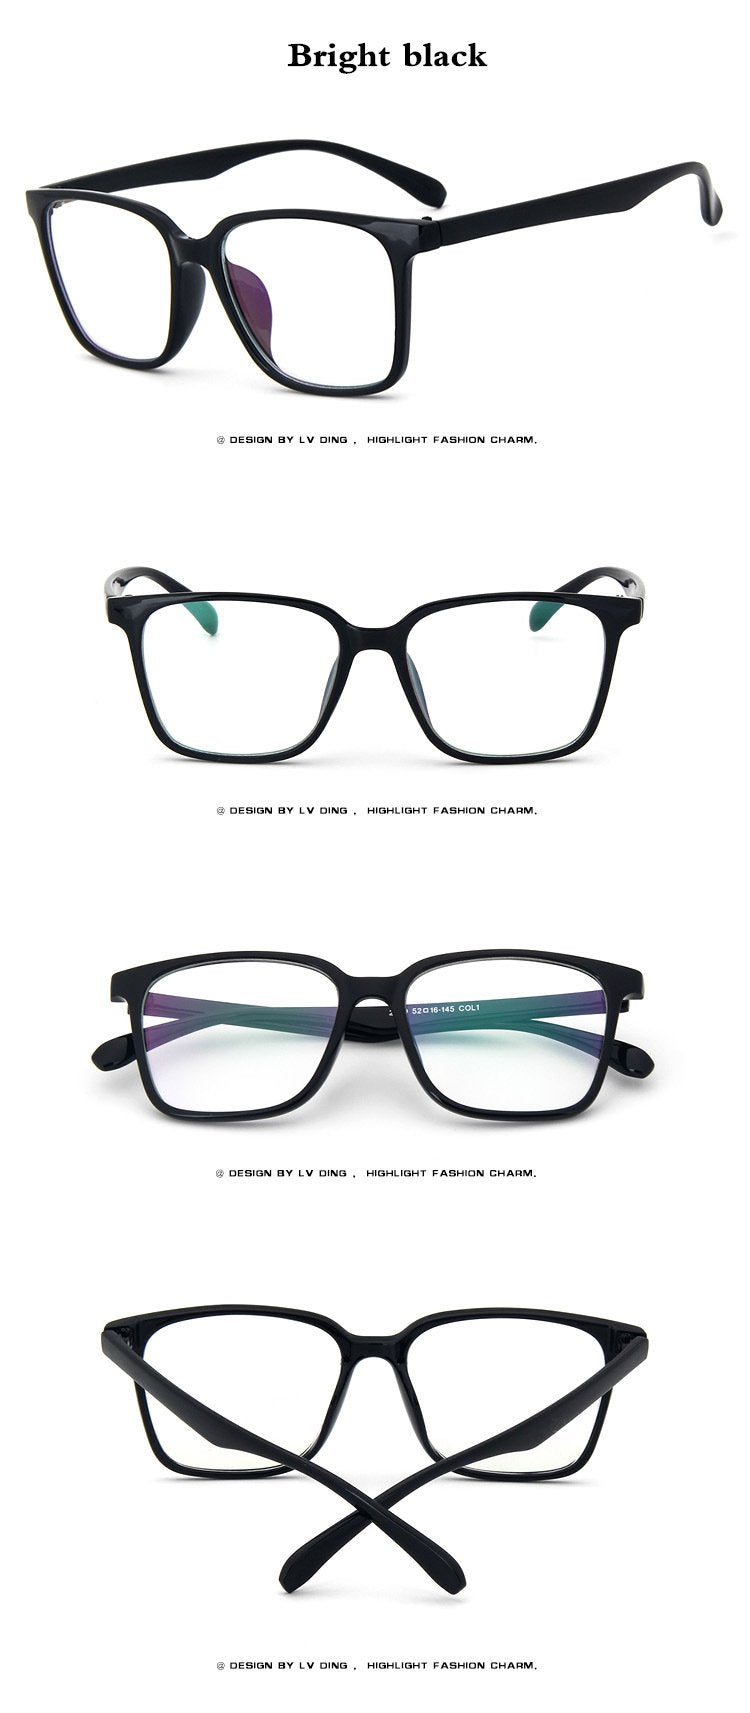 Fashion Square Glasses Frame